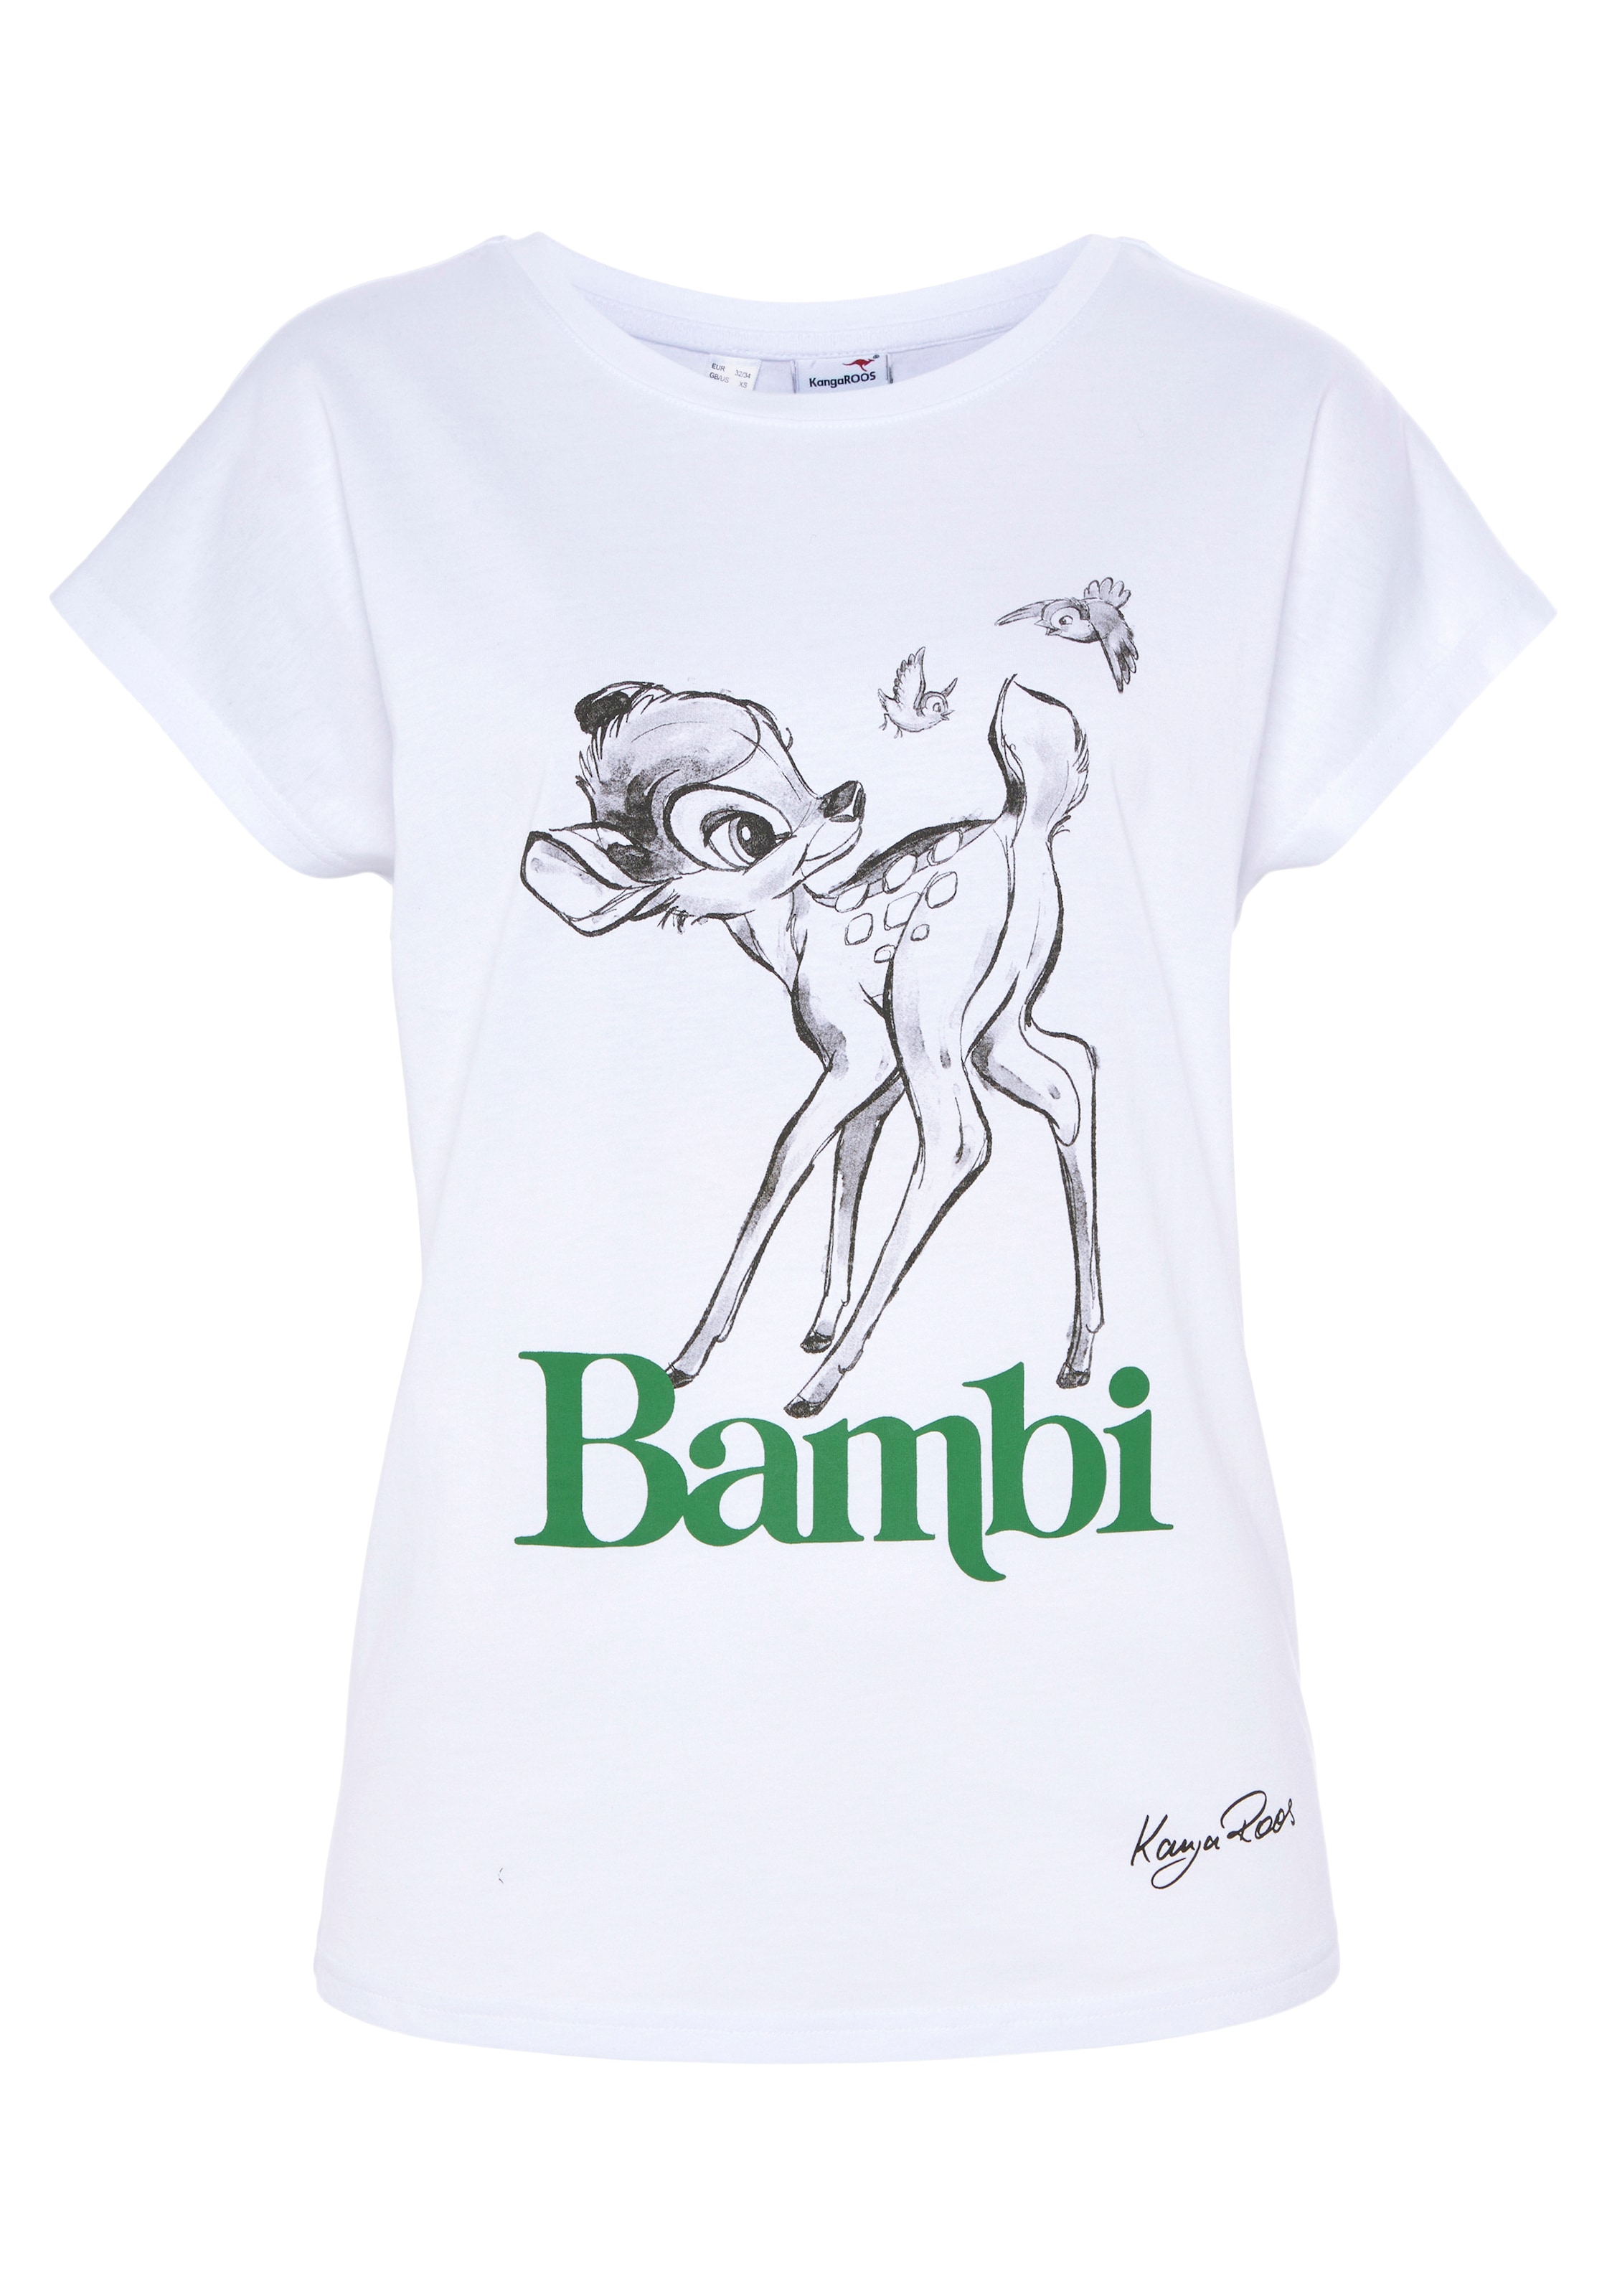 KangaROOS T-Shirt, mit süssem lizensiertem Original Bambi-Design - NEU KOLLEKTION